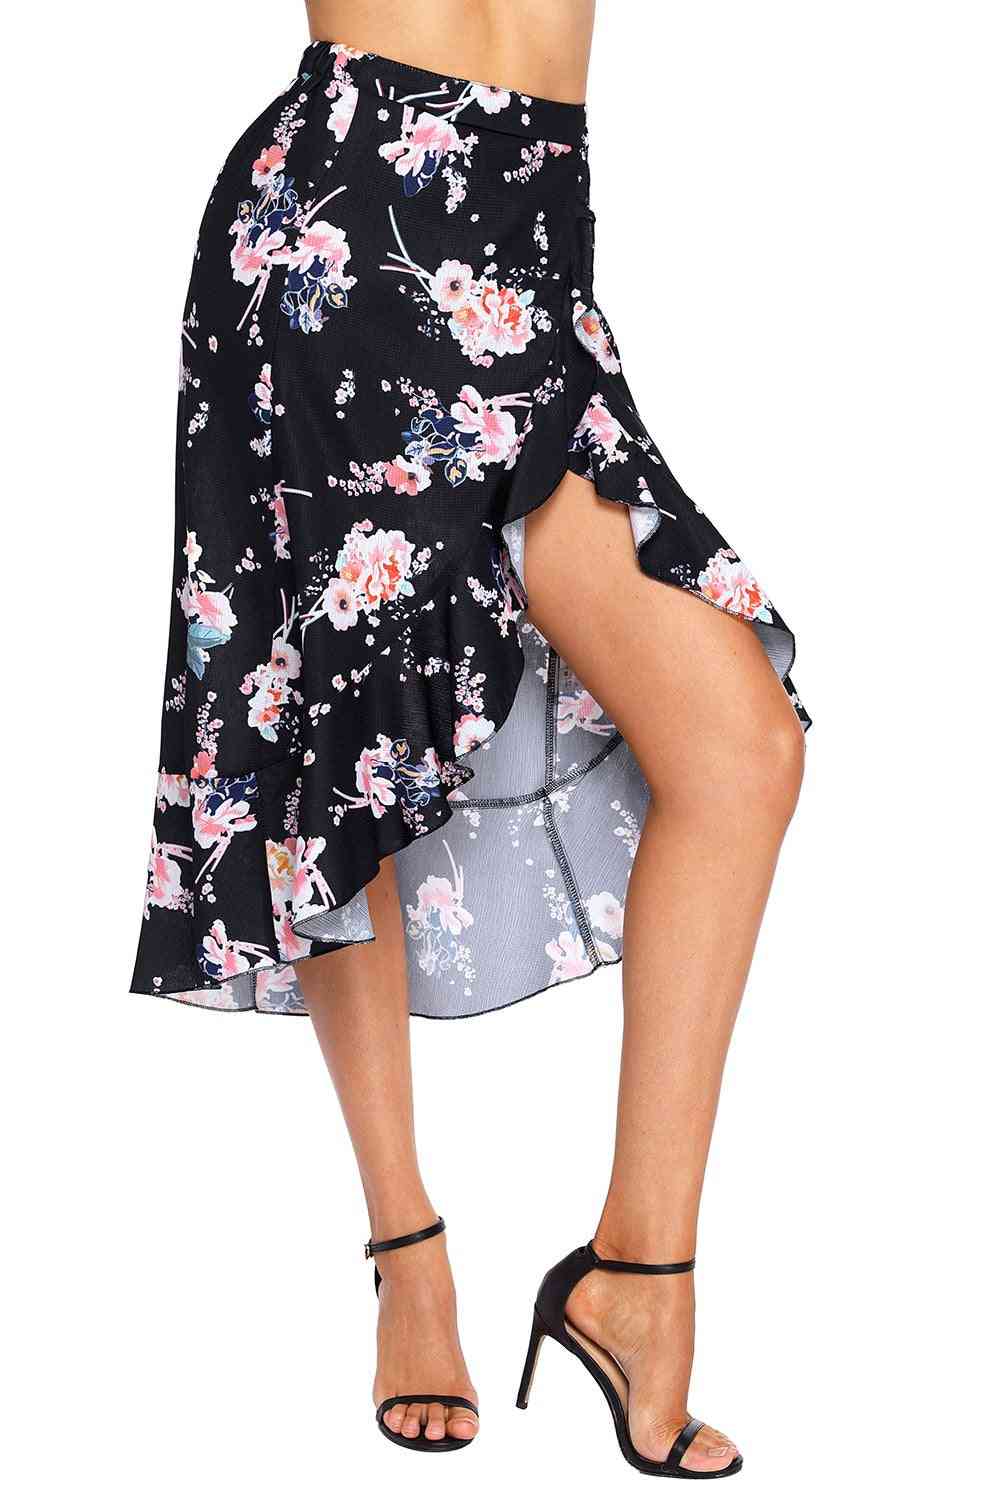 Black Floral Ruffle Wrap Knee-length Skirt